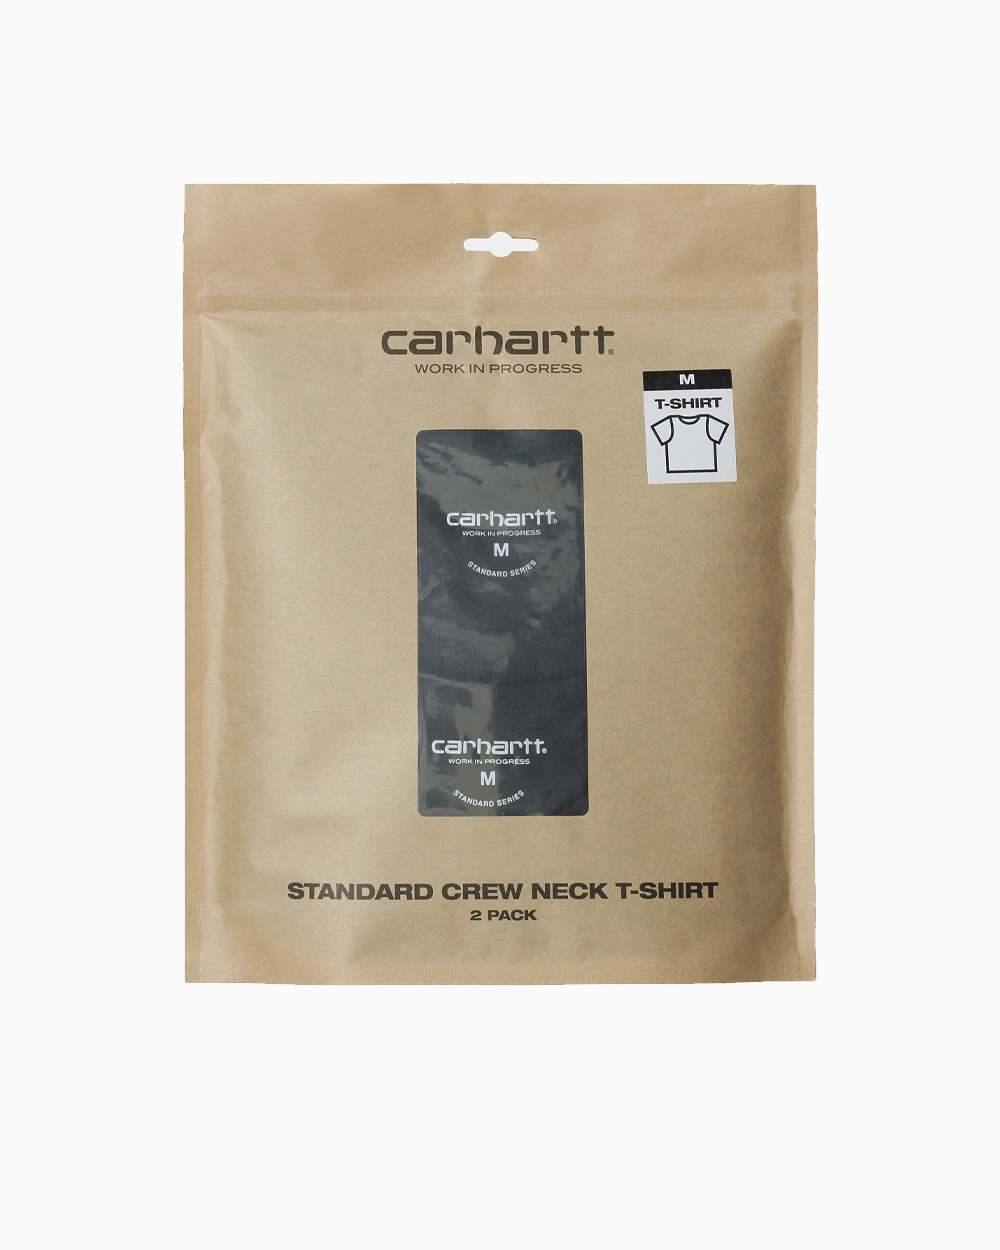 Carhartt Wip: Футболка Carhartt Standard Crew Neck T-Shirt  (2 шт.)